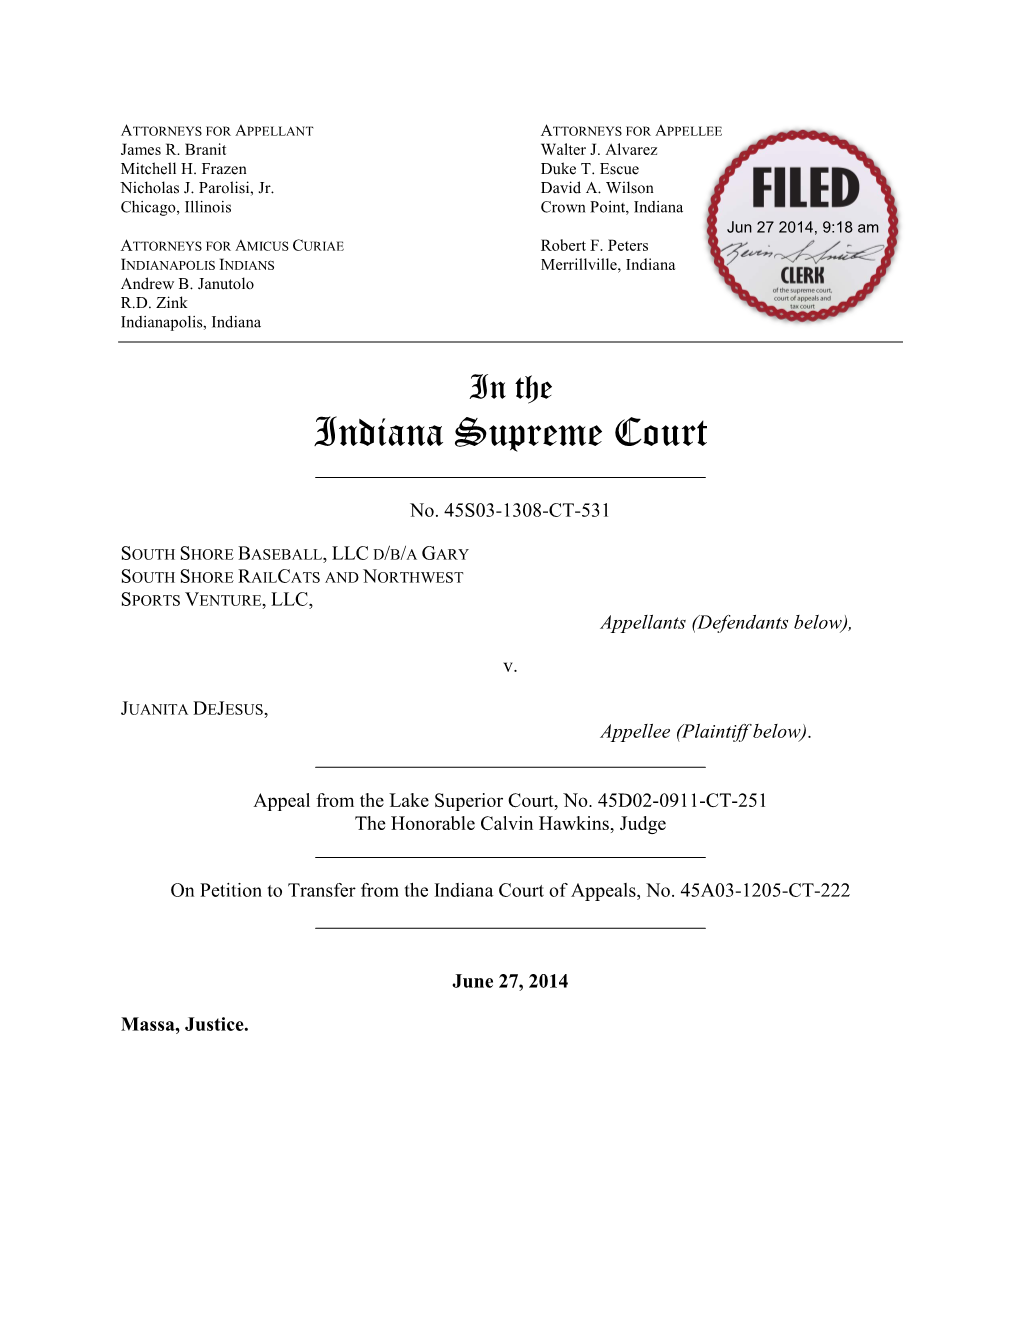 SOUTH SHORE BASEBALL, LLC D/B/A GARY SOUTH SHORE RAILCATS and NORTHWEST SPORTS VENTURE, LLC, Appellants (Defendants Below)